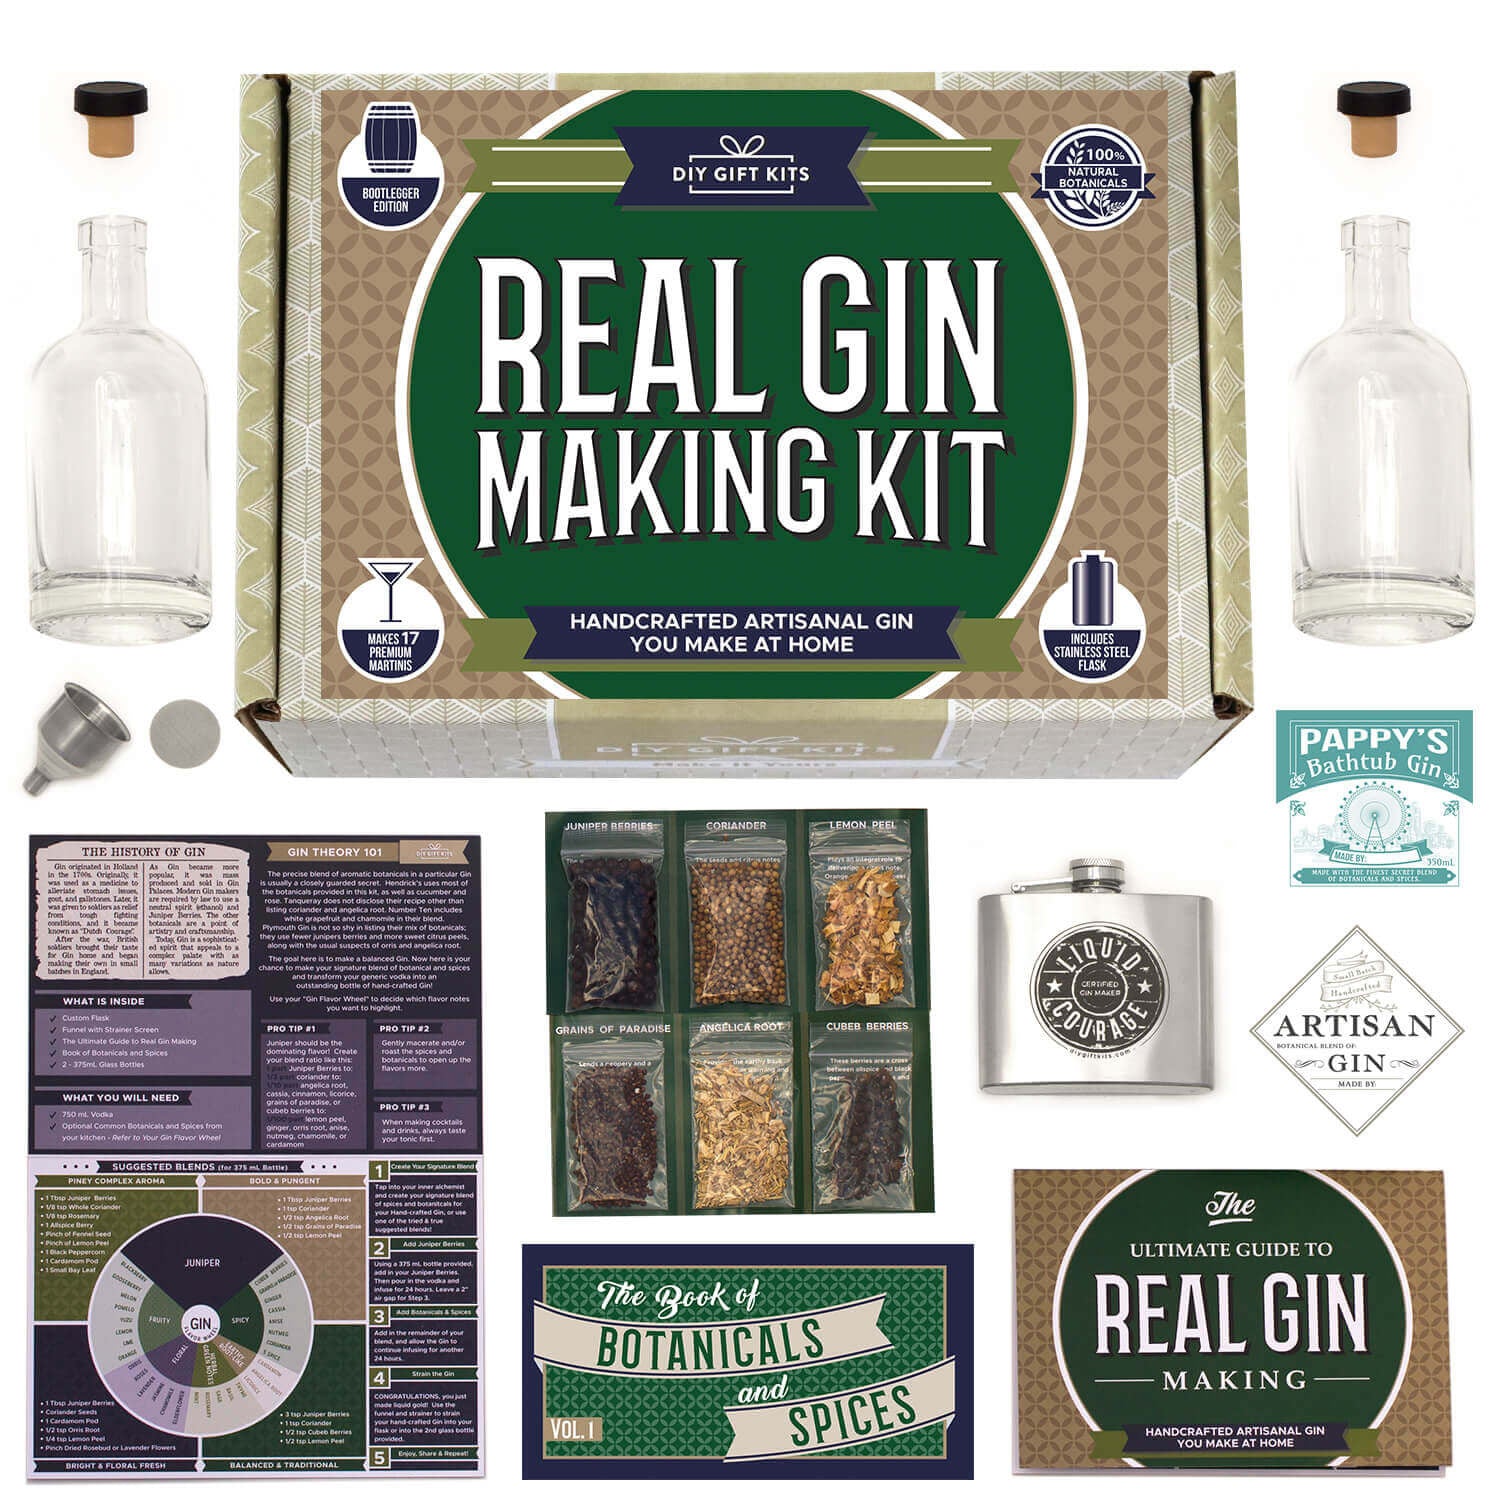 The Homemade Gin Kit